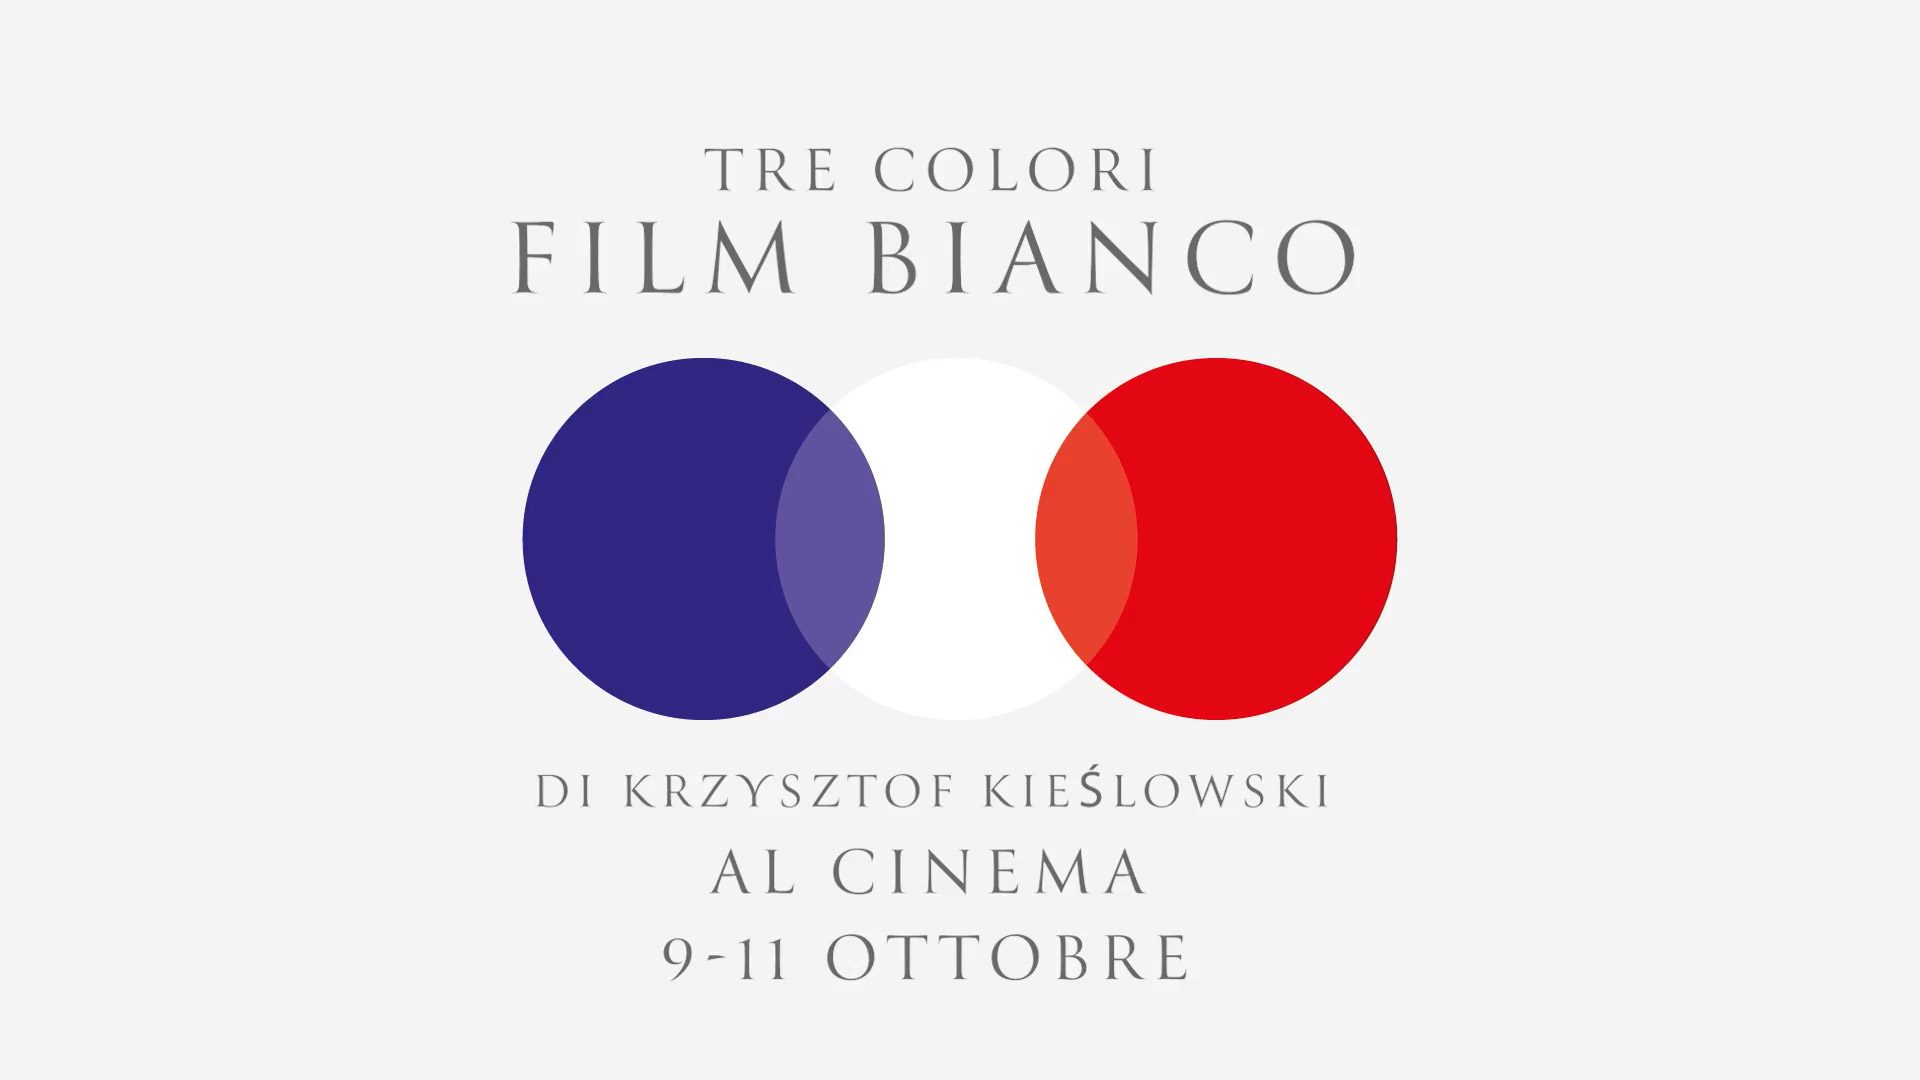 Film bianco (Tre colori) di Krzysztof Kieślowski al cinema il 9-10-11 ottobre 2023